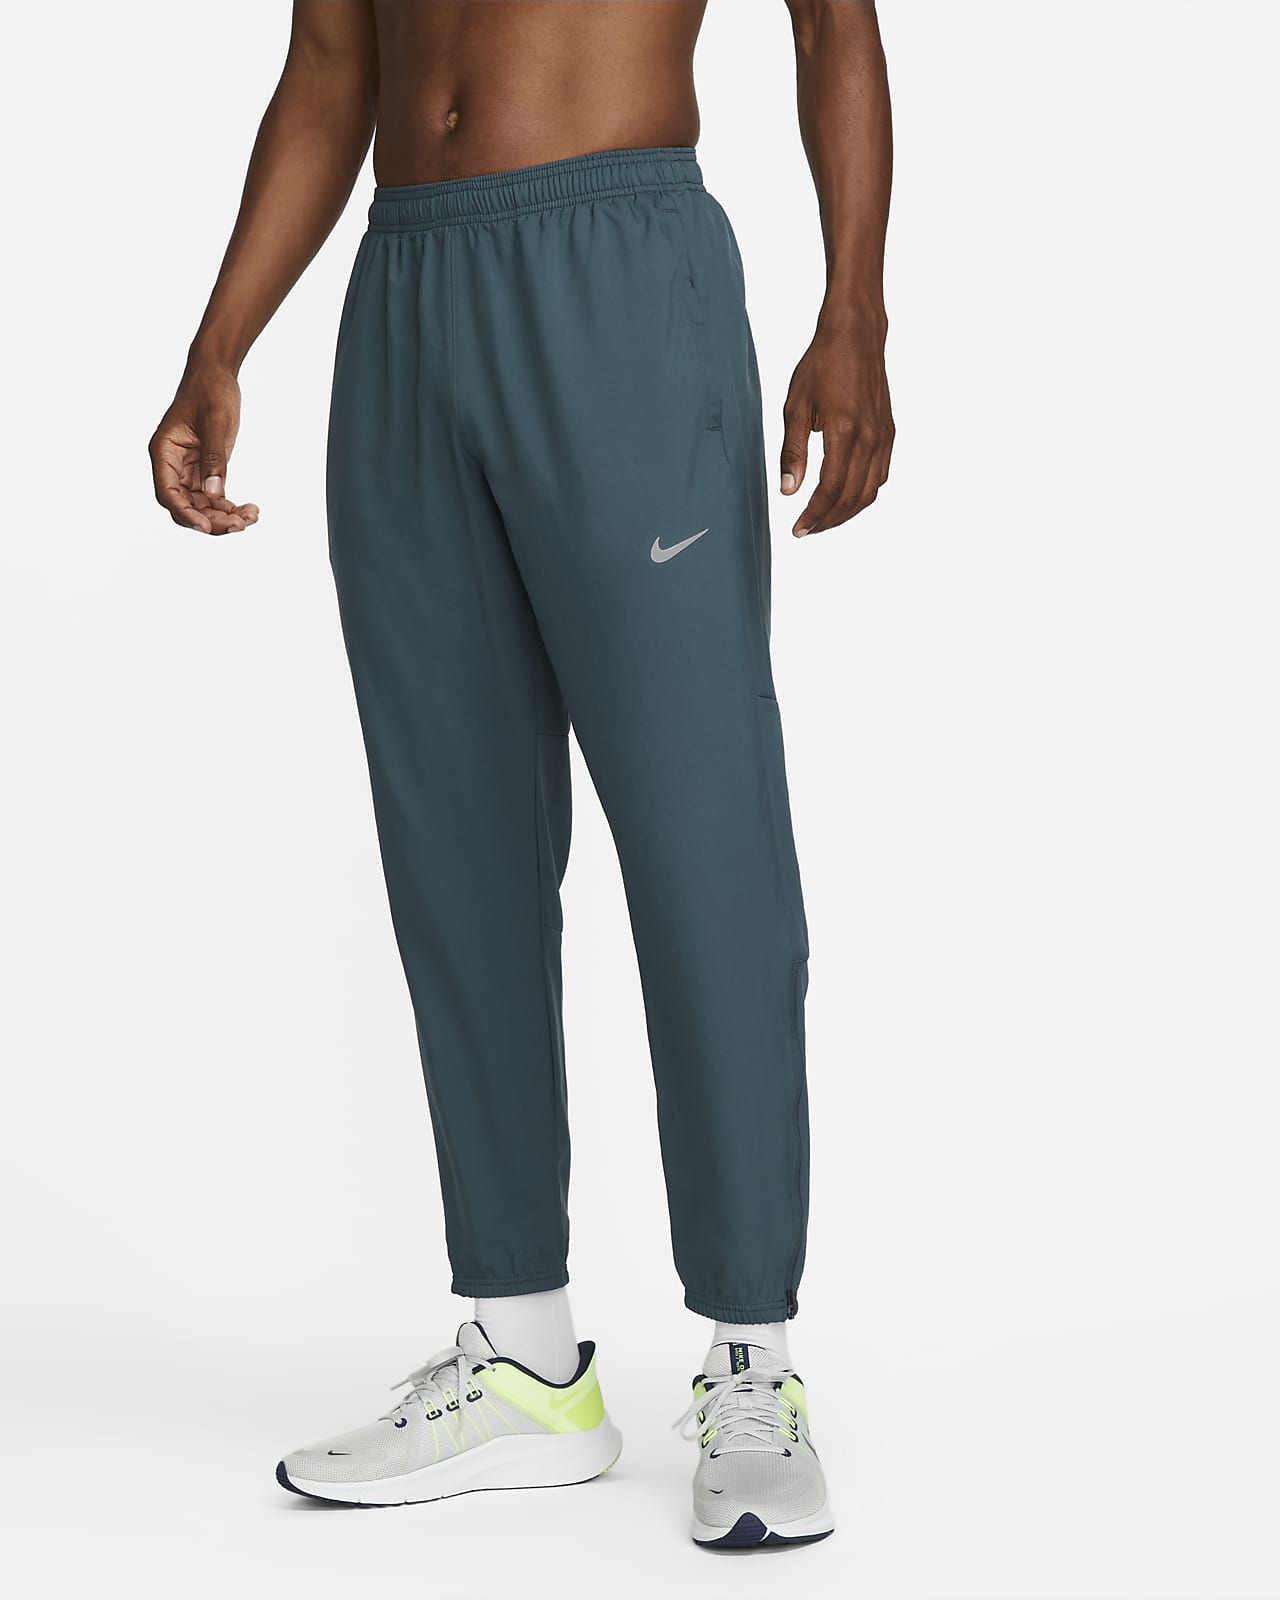 Refusal Yogurt Monday Nike Dri-FIT Challenger Men's Woven Running Pants. Nike.com